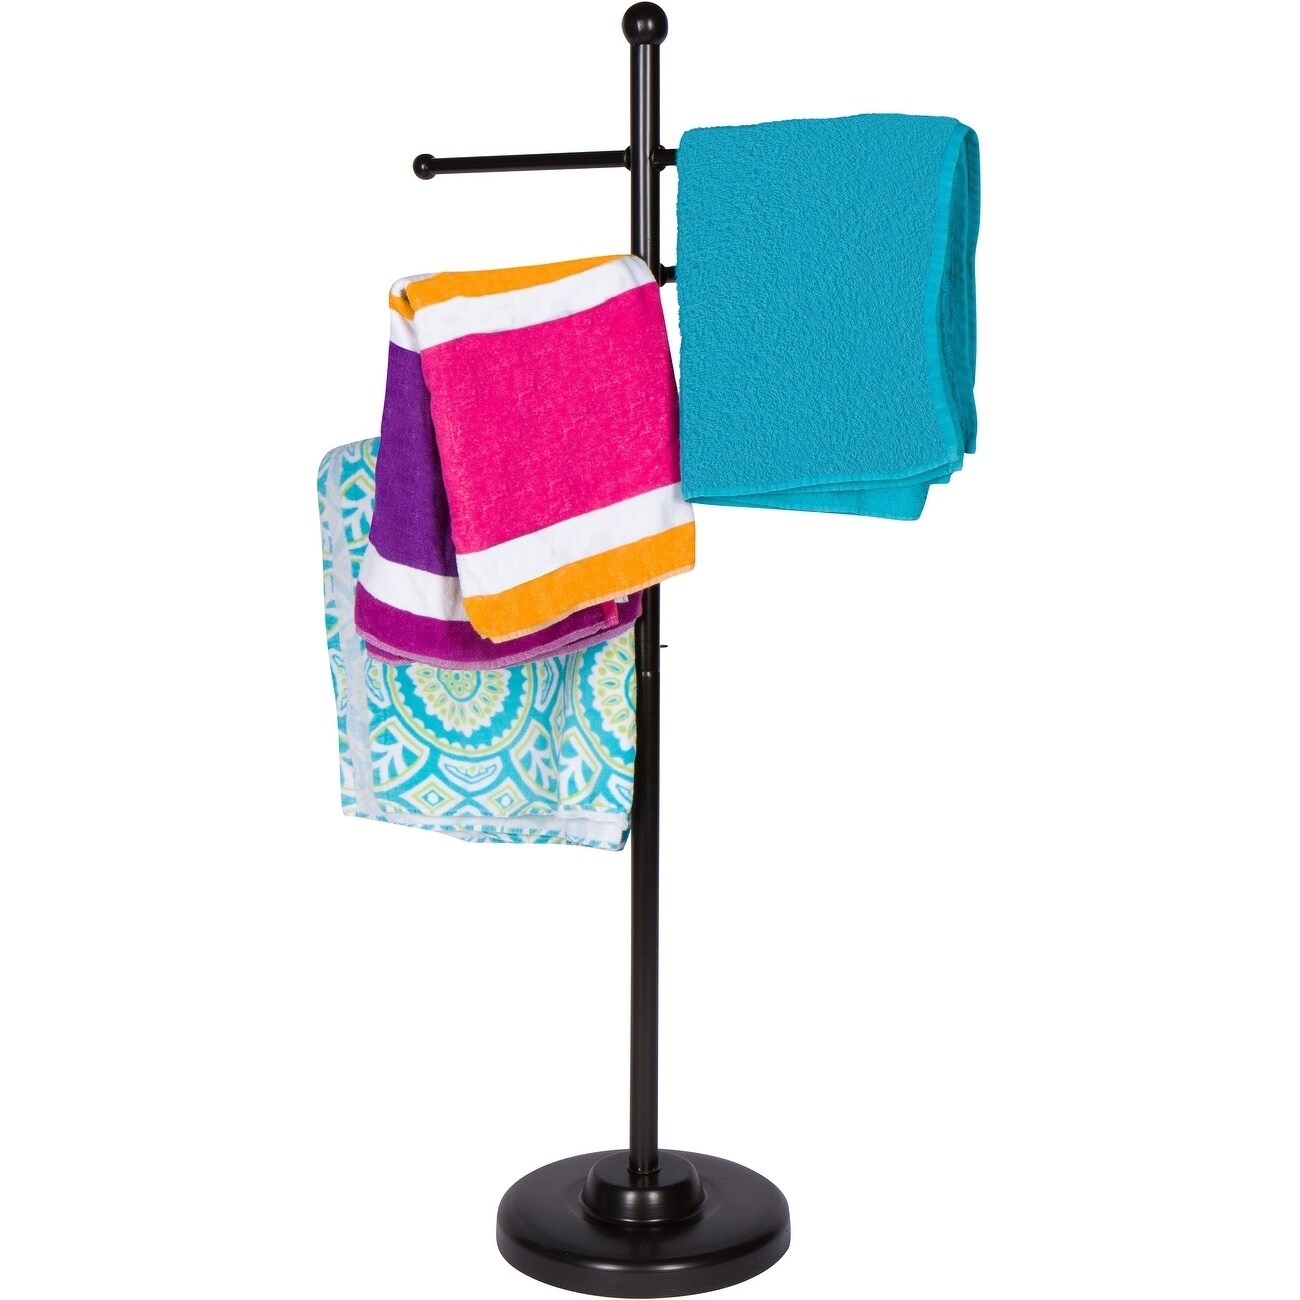 TOWELS & TRUNKS Towel Rack, Rustic Carved Wood Sign, Swimming Pool, Hot Tub